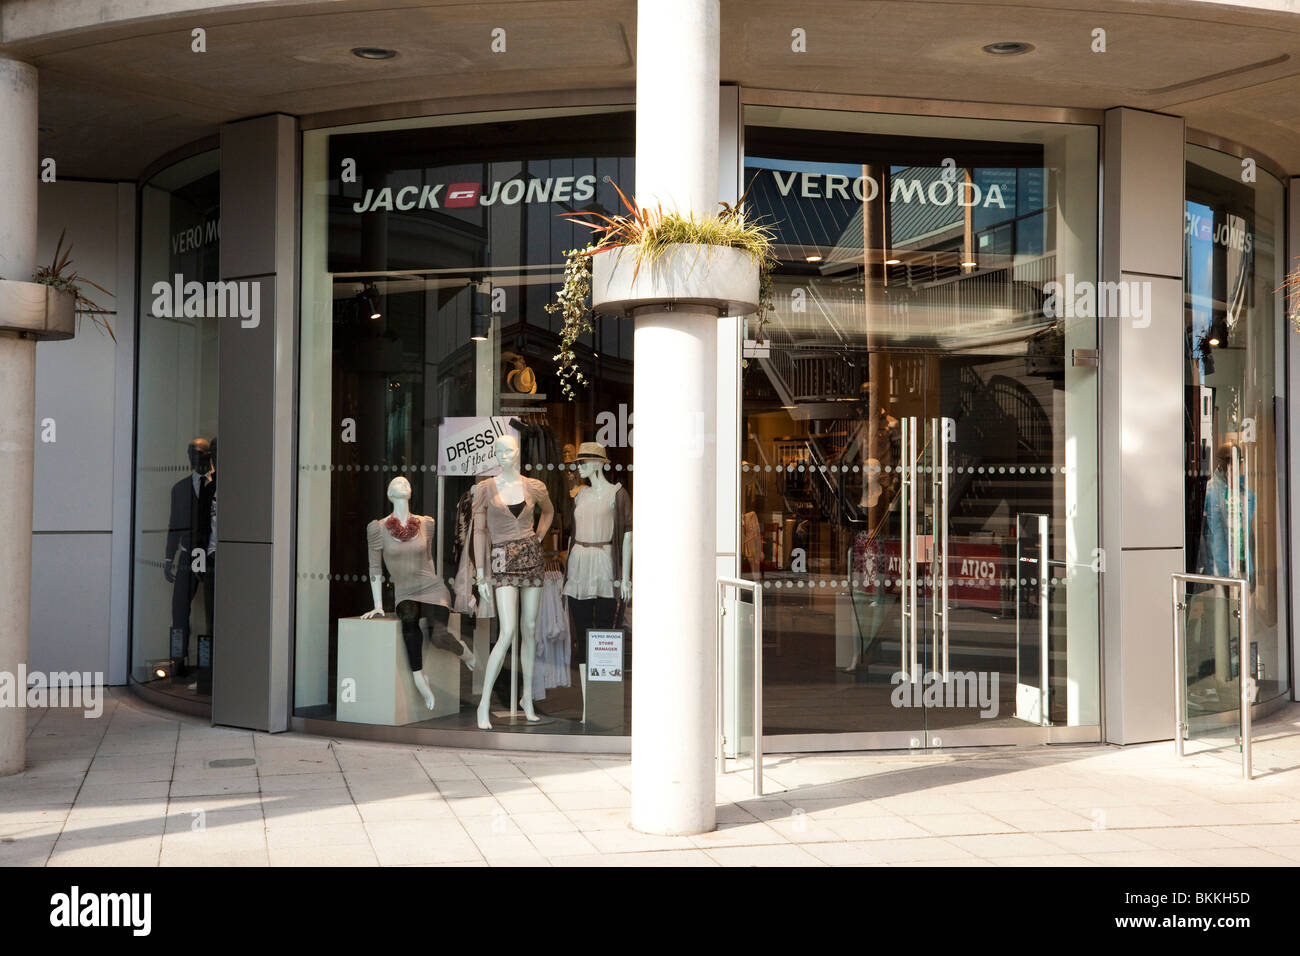 Jack Jones / Vero Moda clothing store Stock Photo Alamy